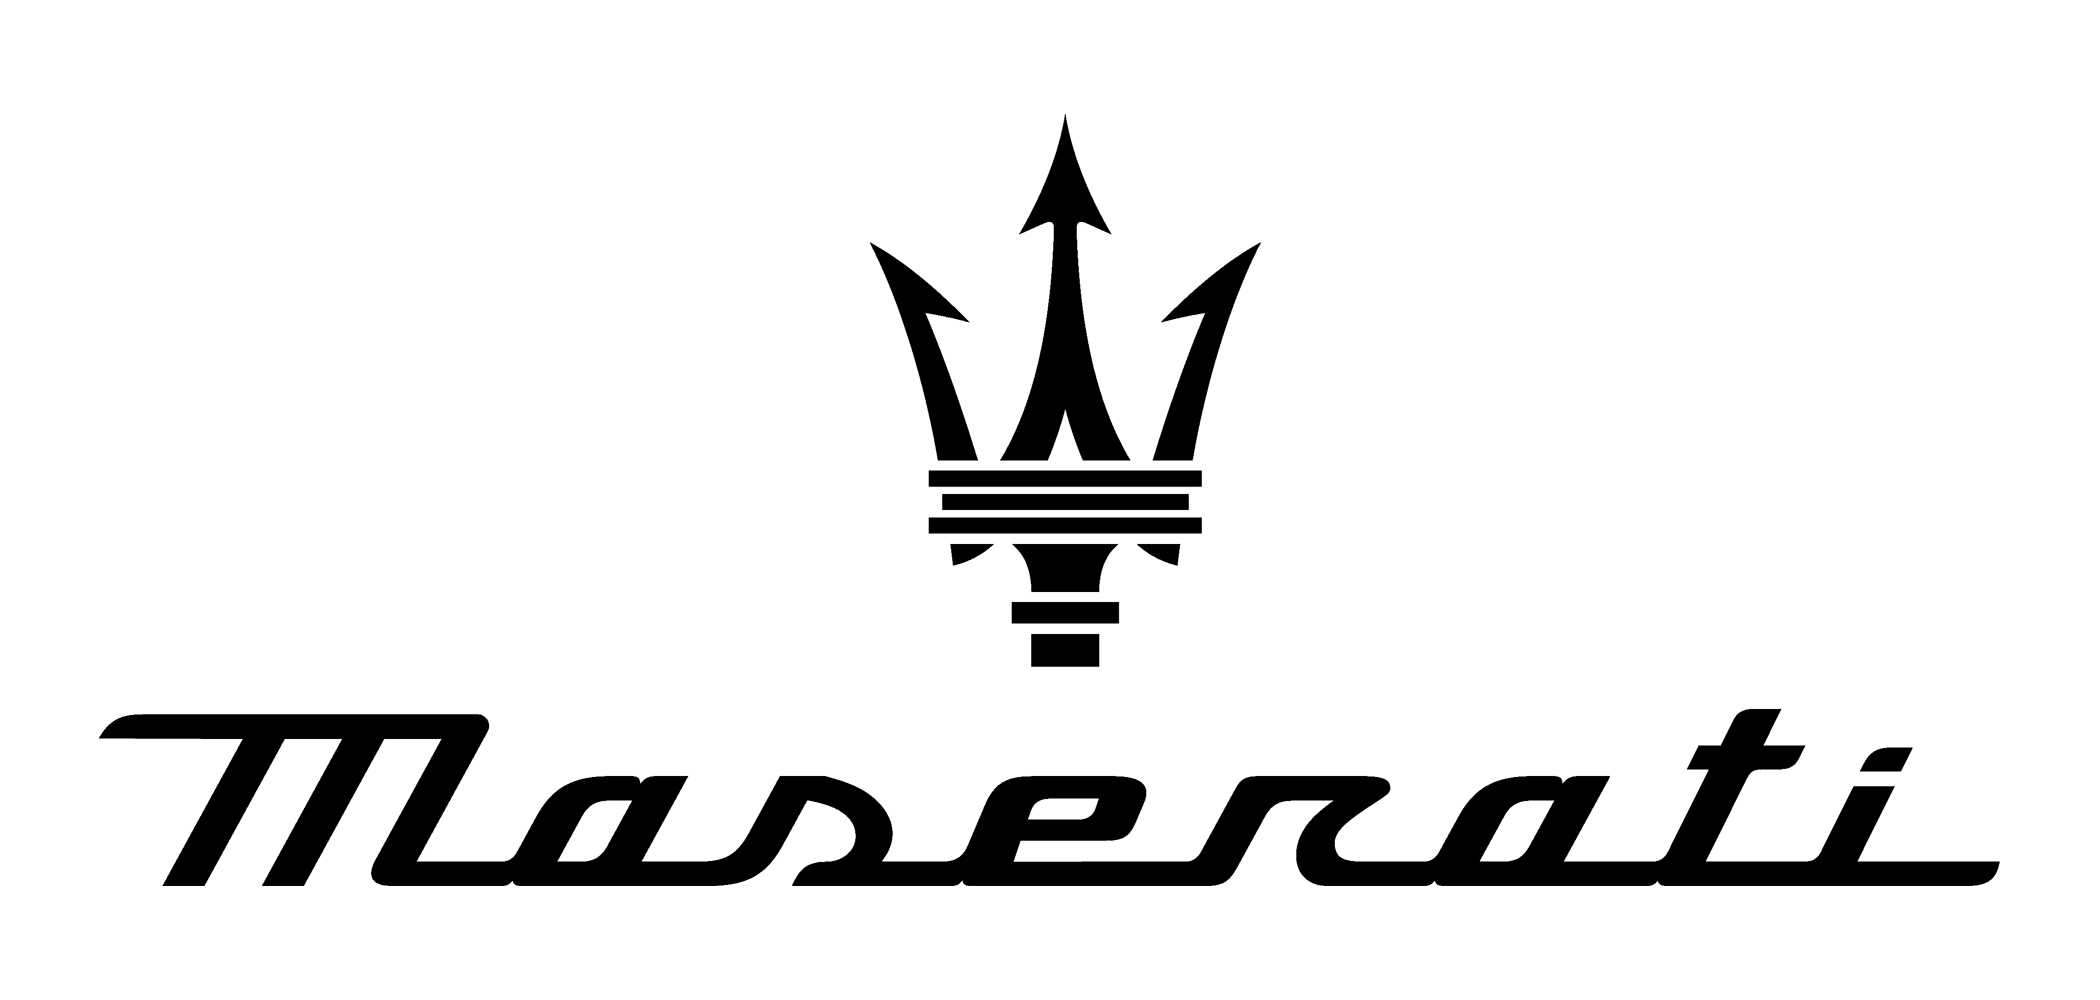 maserati-logo-2020.png